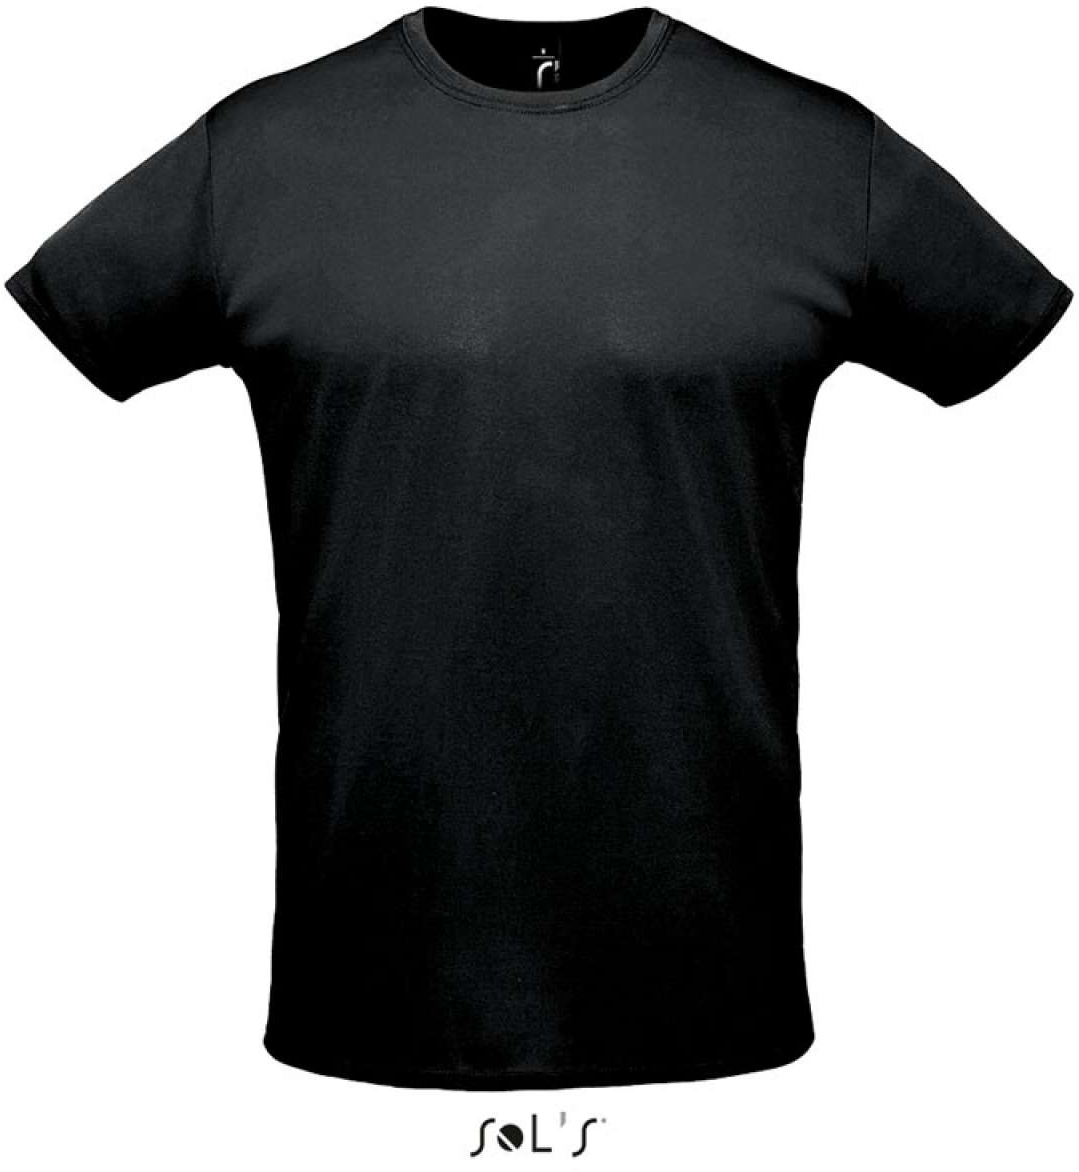 Sol's Sprint - Unisex Sport T-shirt - Sol's Sprint - Unisex Sport T-shirt - Black